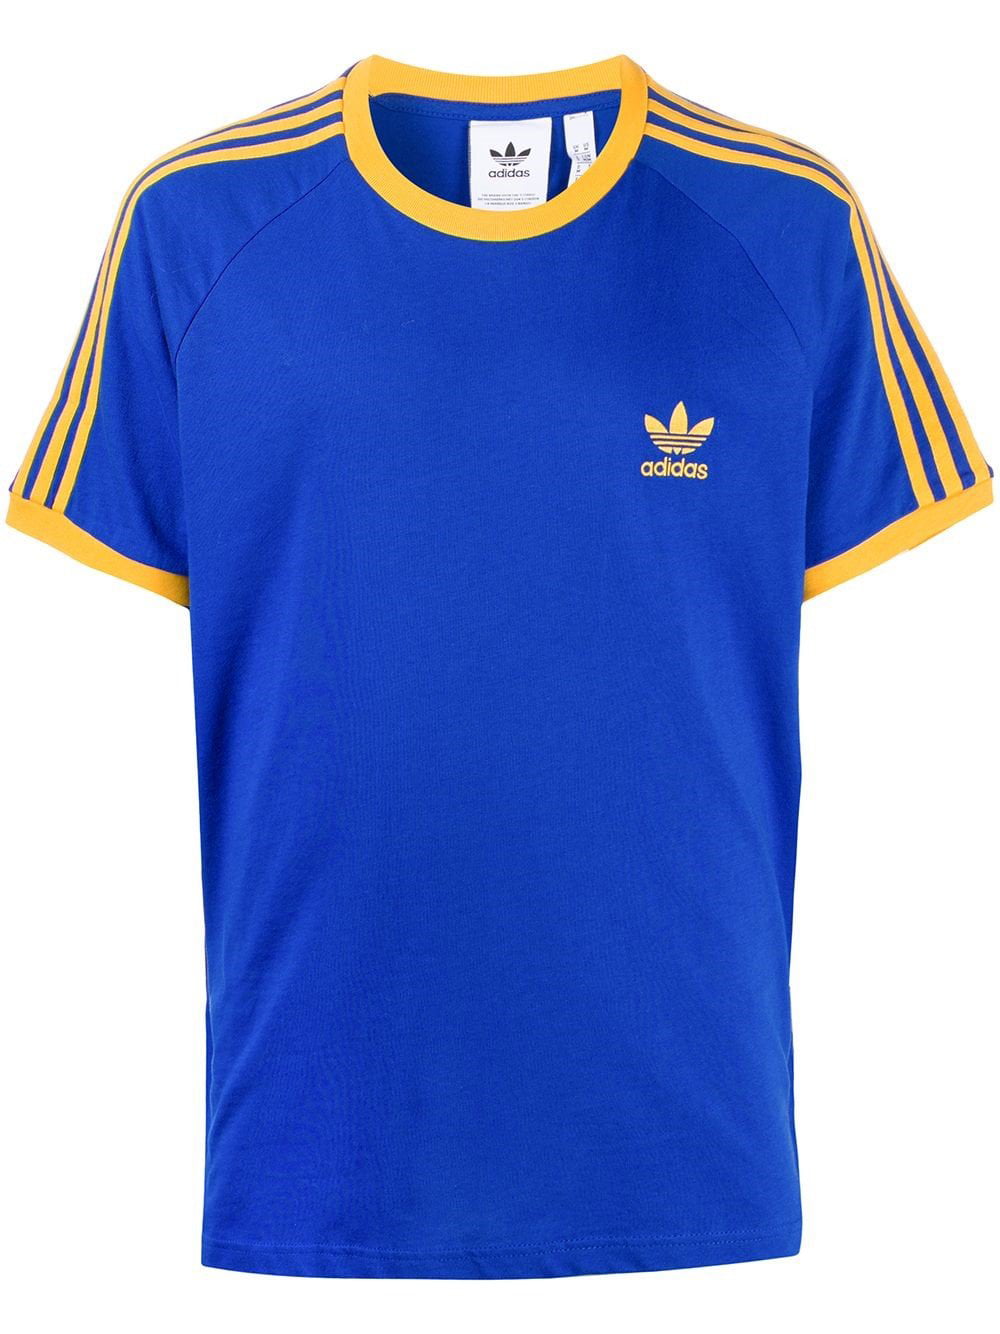 Adidas Men's Tee, Blue/Active Gold - Walmart.com